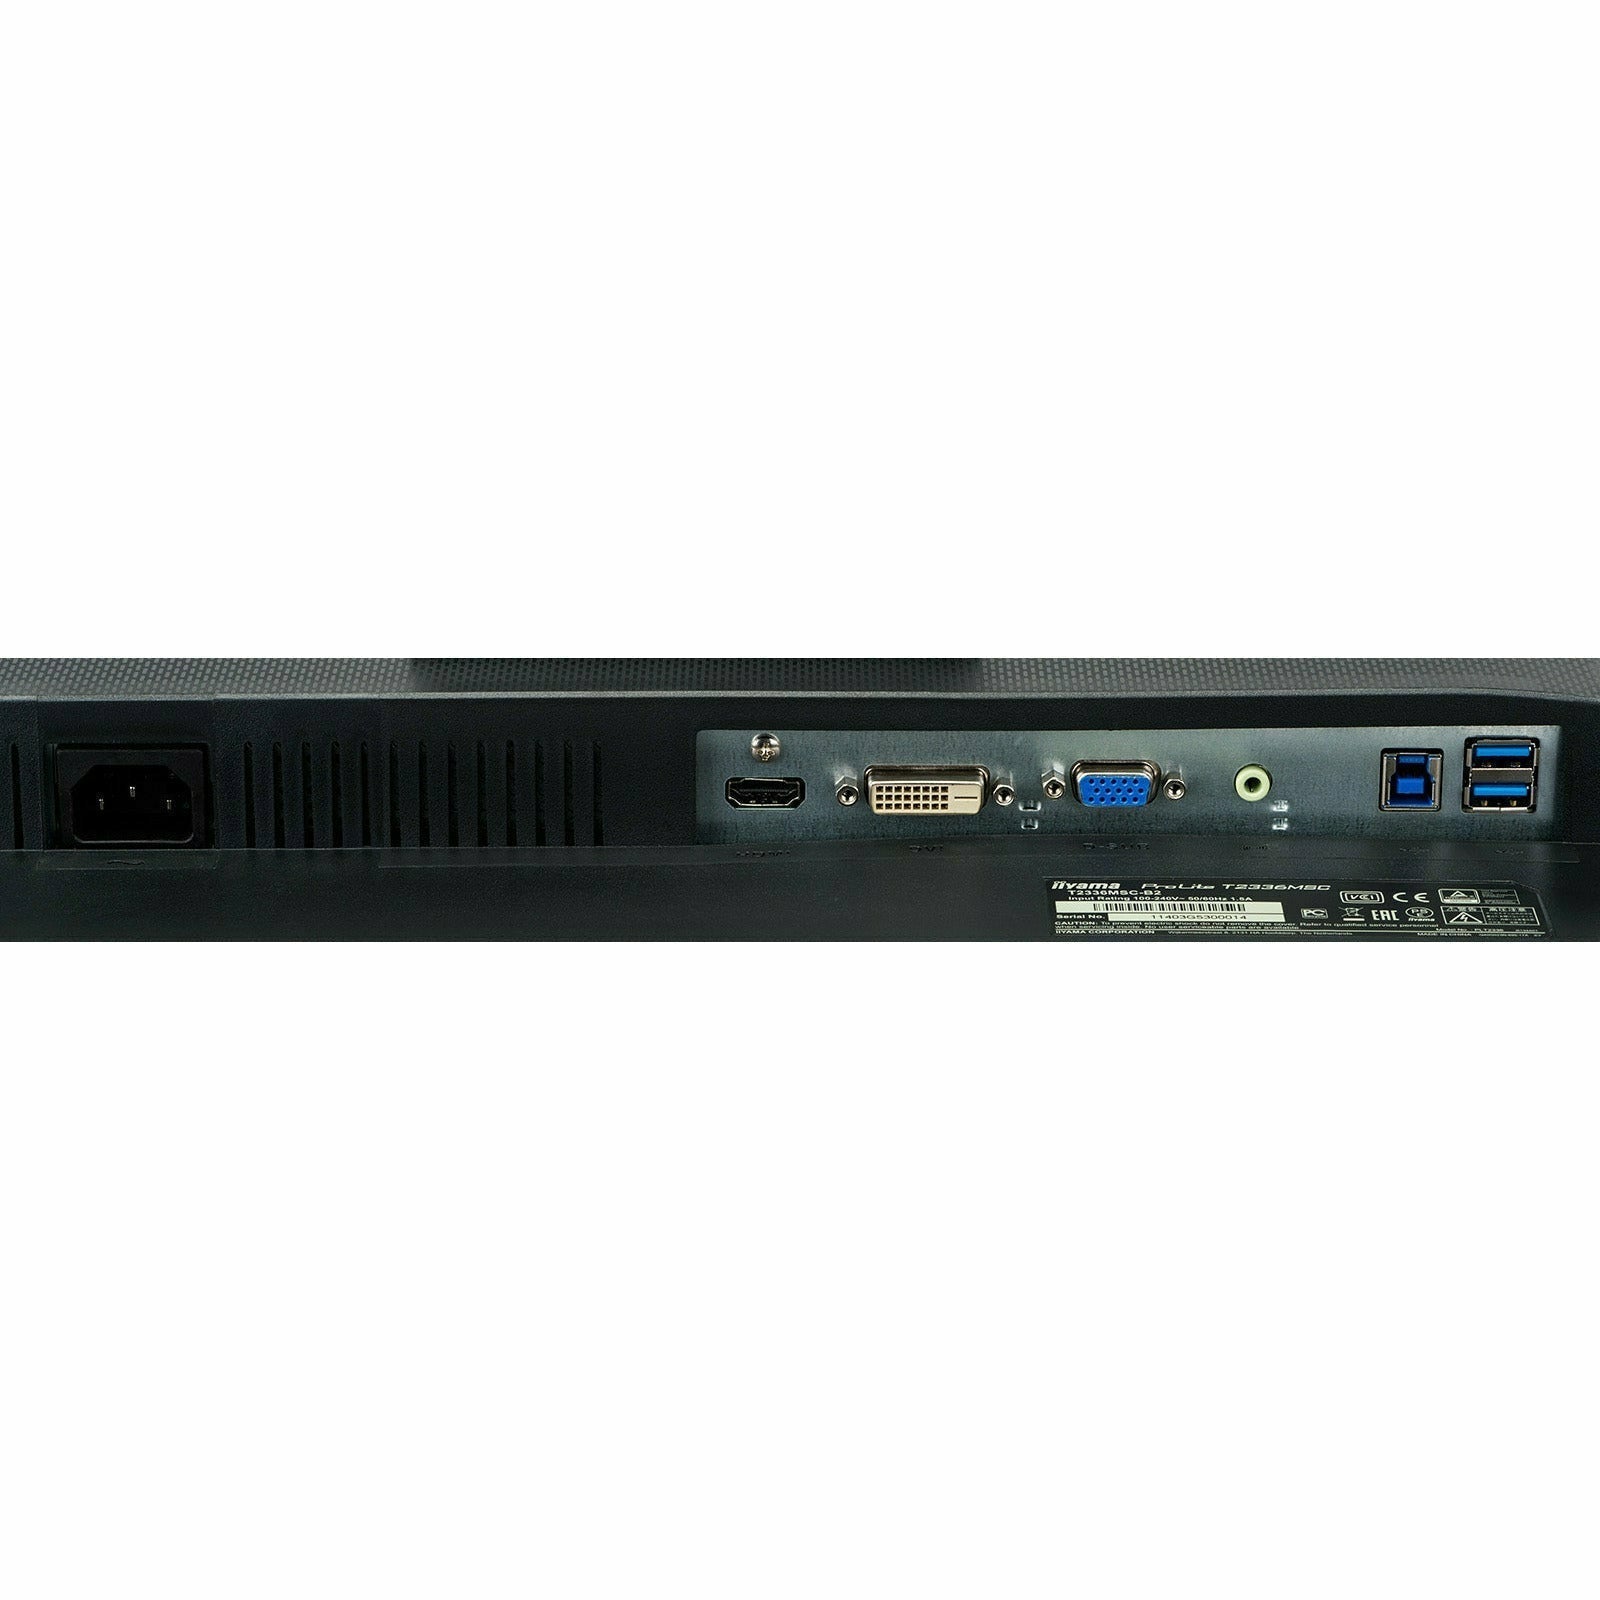 iiyama ProLite T2336MSC-B3 23" IPS Touch Monitor